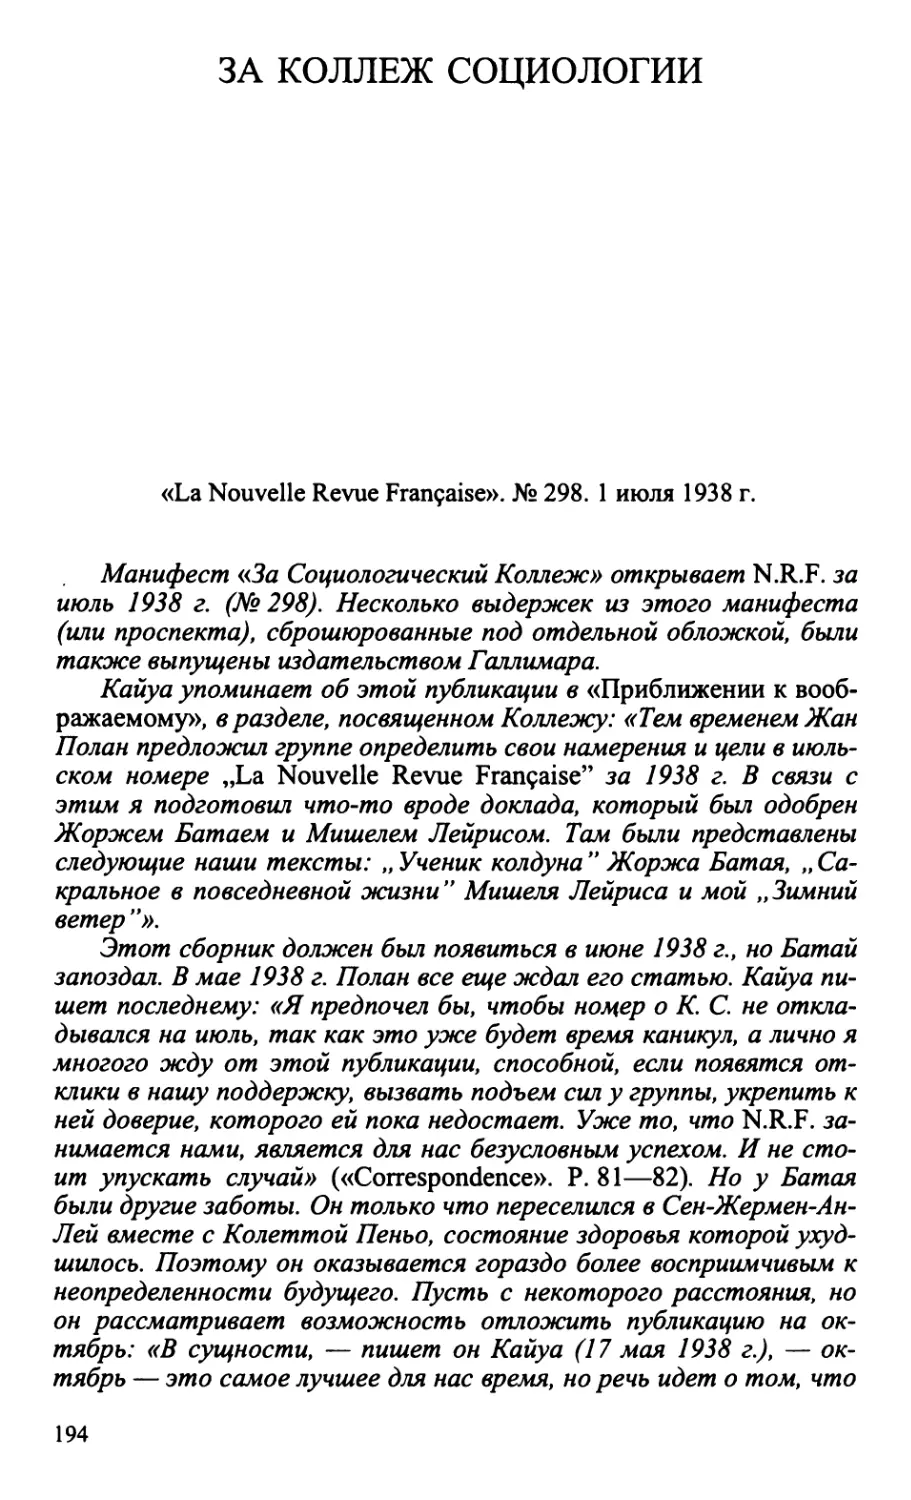 За Коллеж Социологии. «La Nouvelle Revue Française», № 298. 1 июля 1938 г